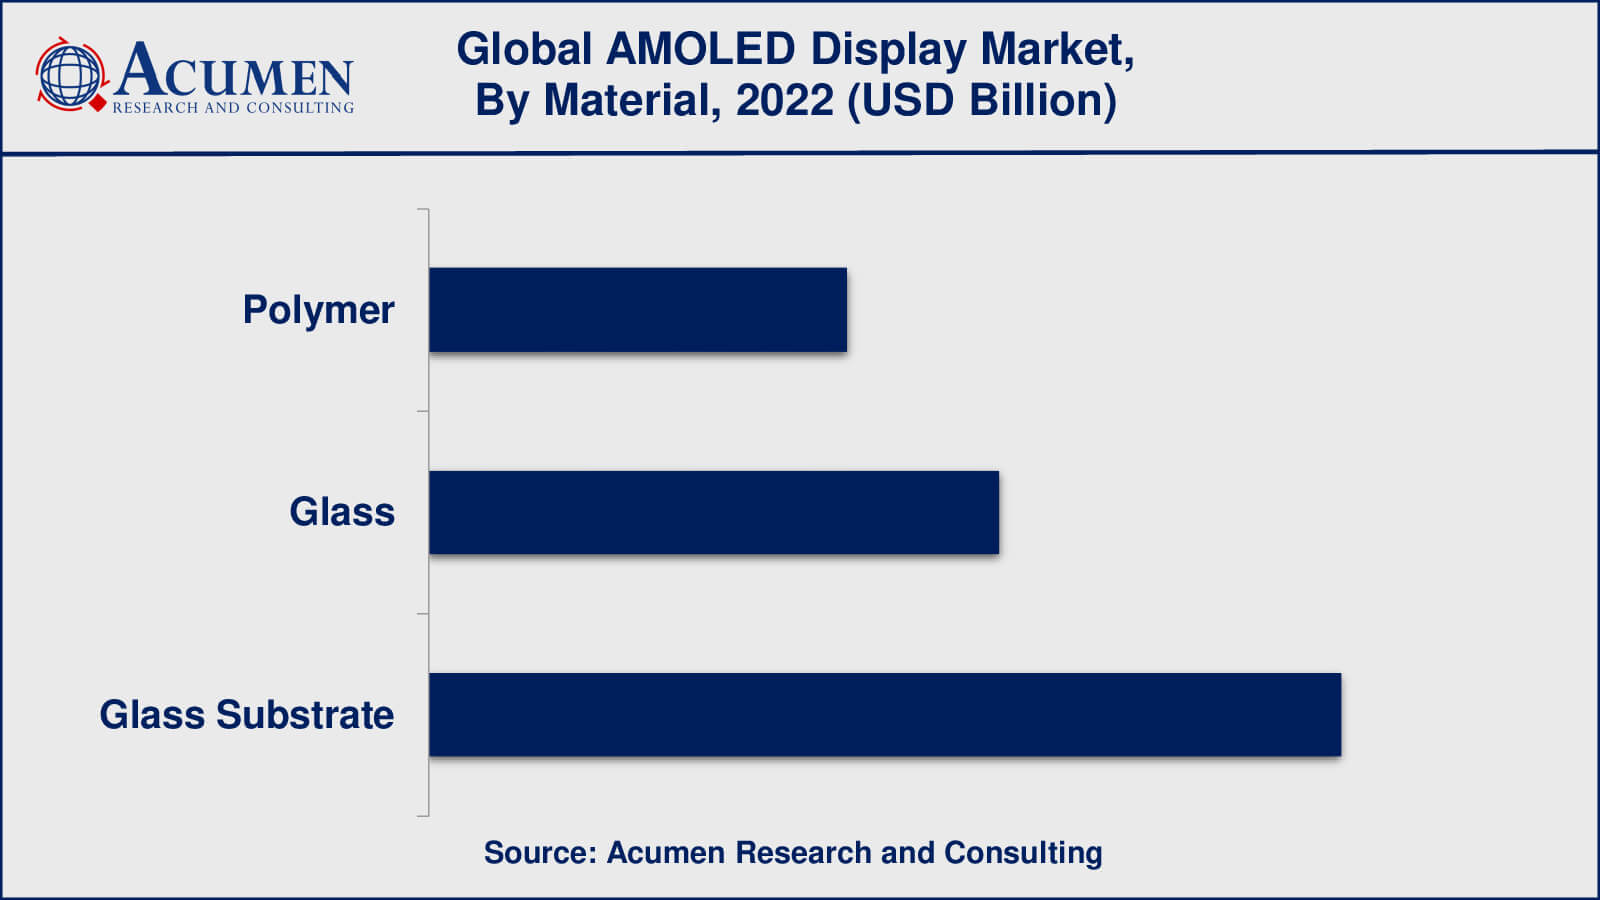 AMOLED Display Market Opportunities